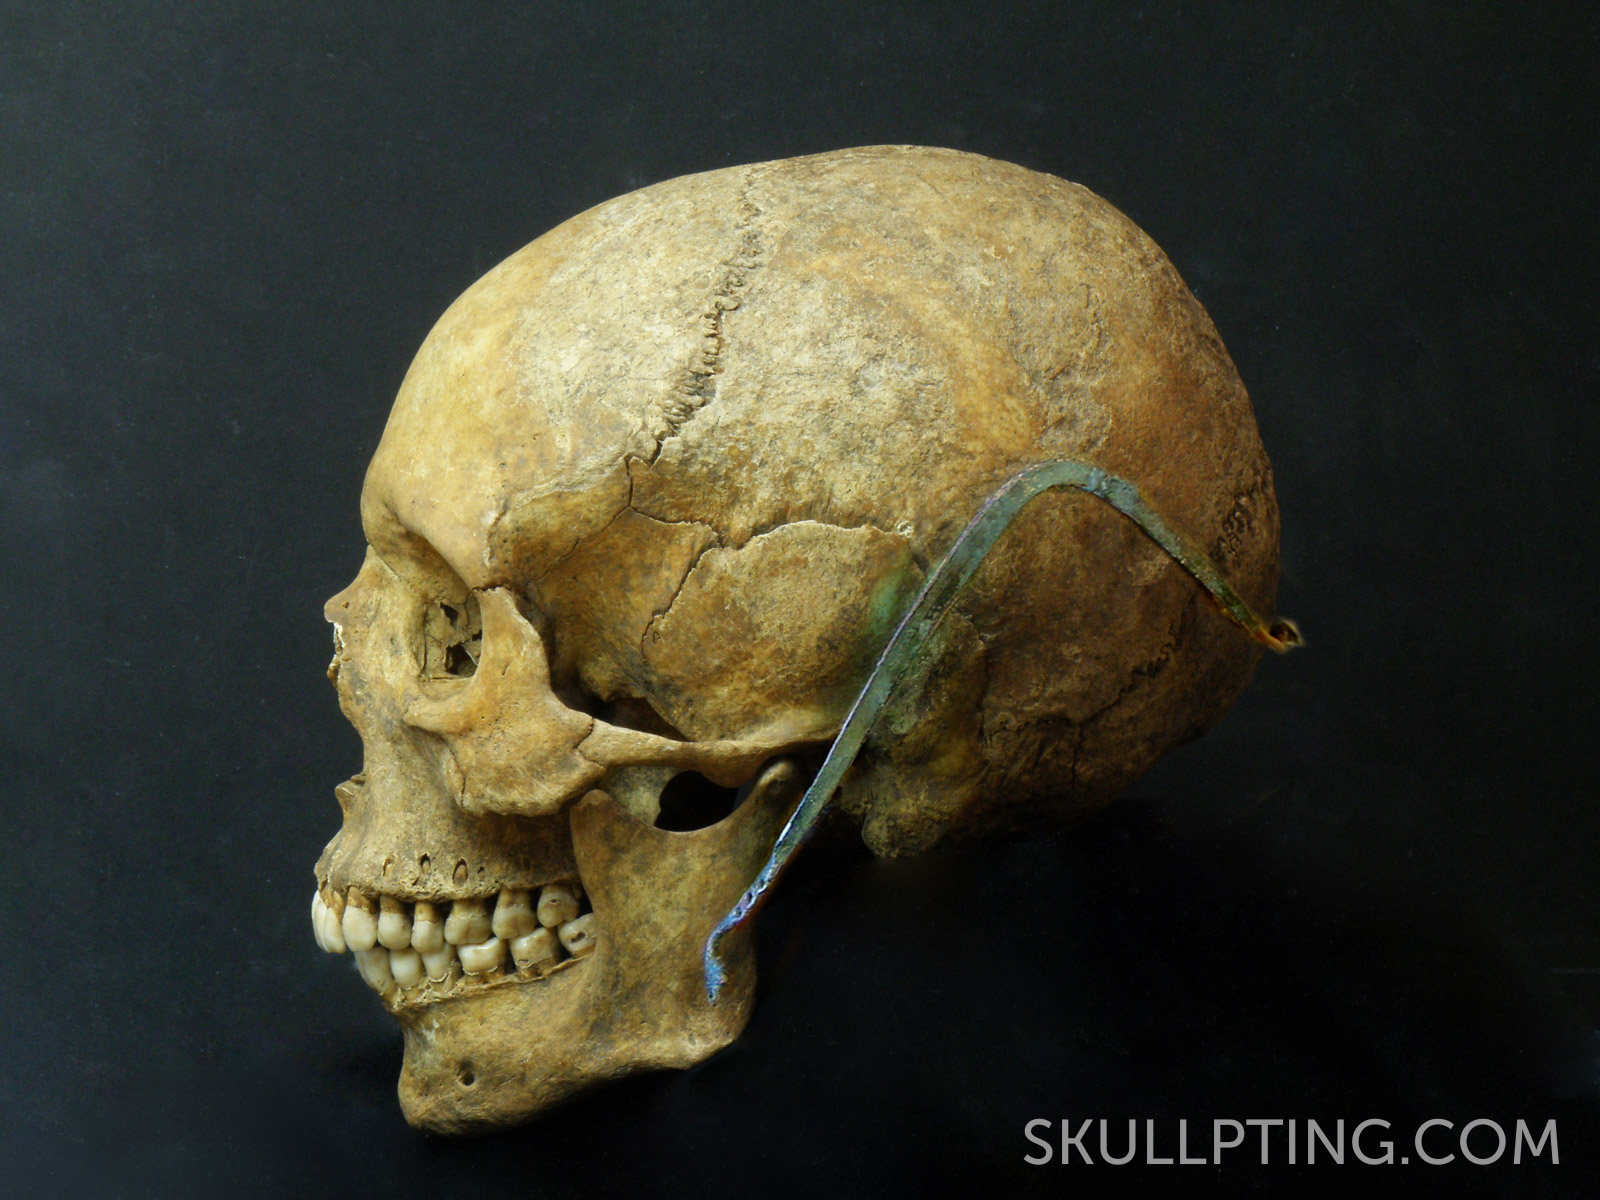 Skull with cap broach.